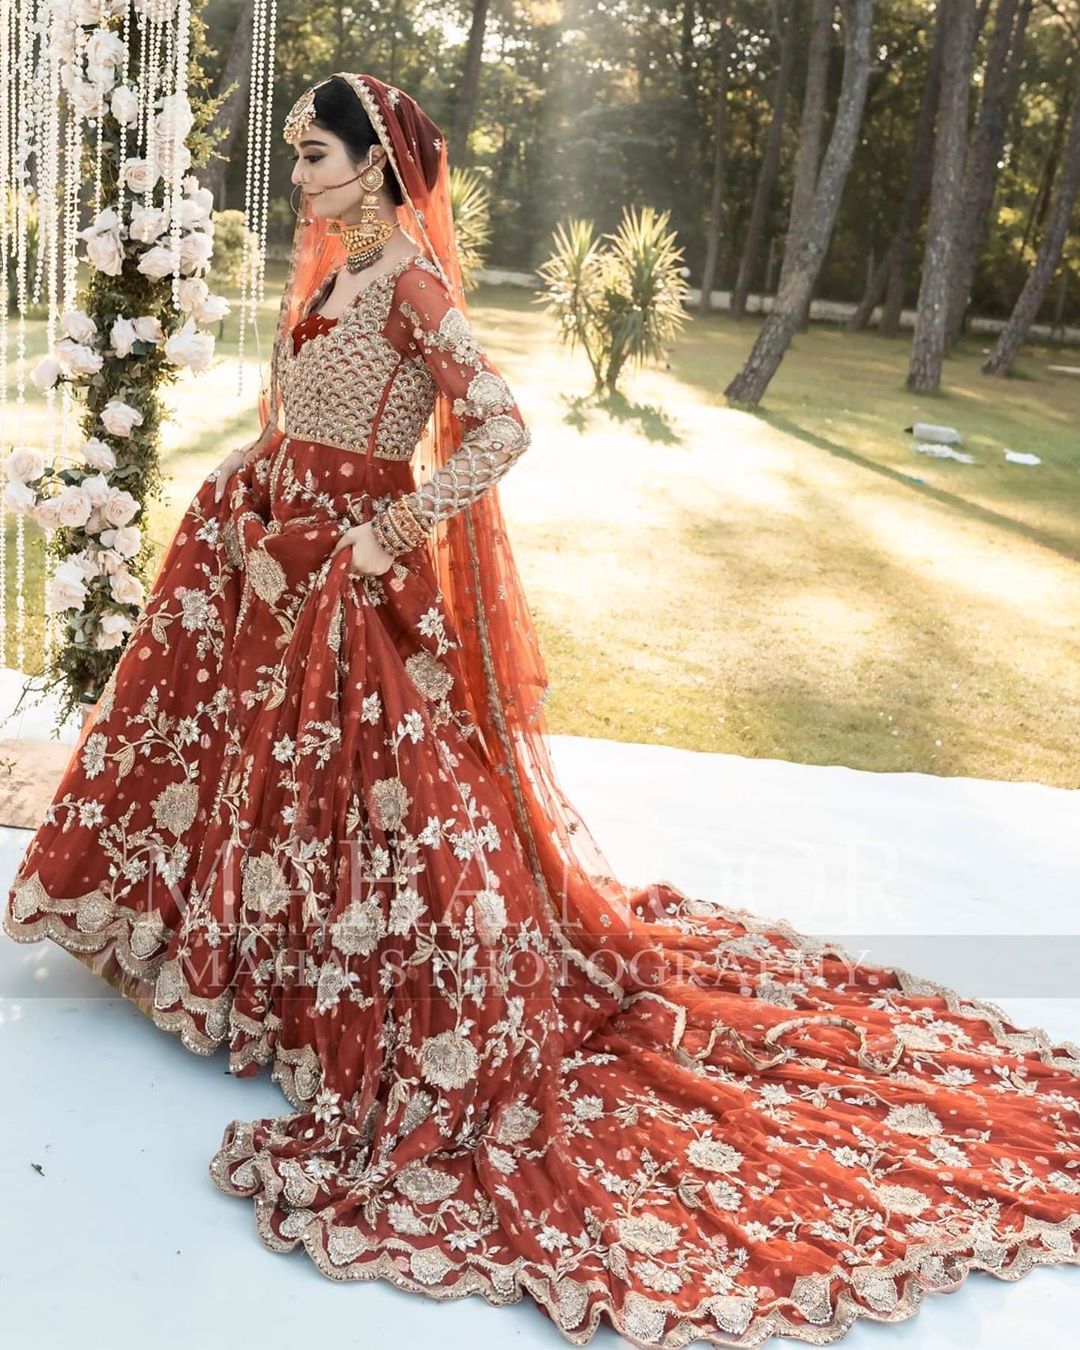 Gorgeous Noor Khan Latest Bridal Photo Shoot